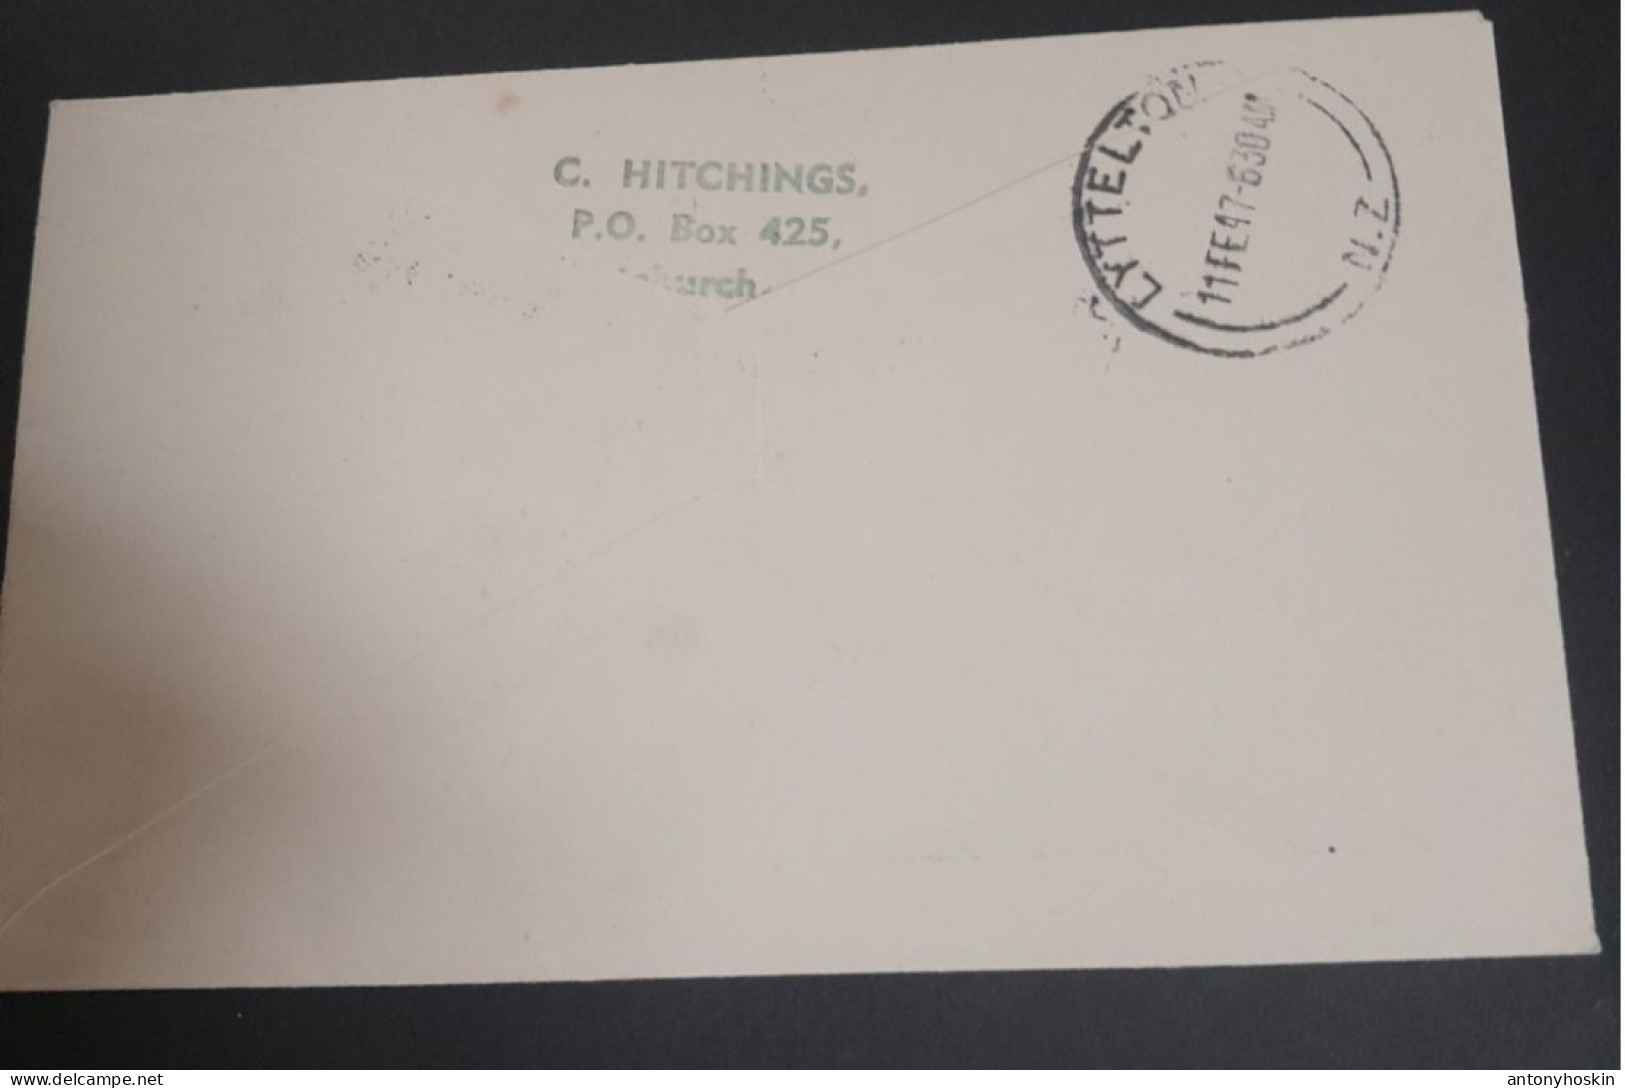 10 Feb 1947 Maiden Voyage  T.E.V Hinemoa Wellington To Lyettlton - Lettres & Documents